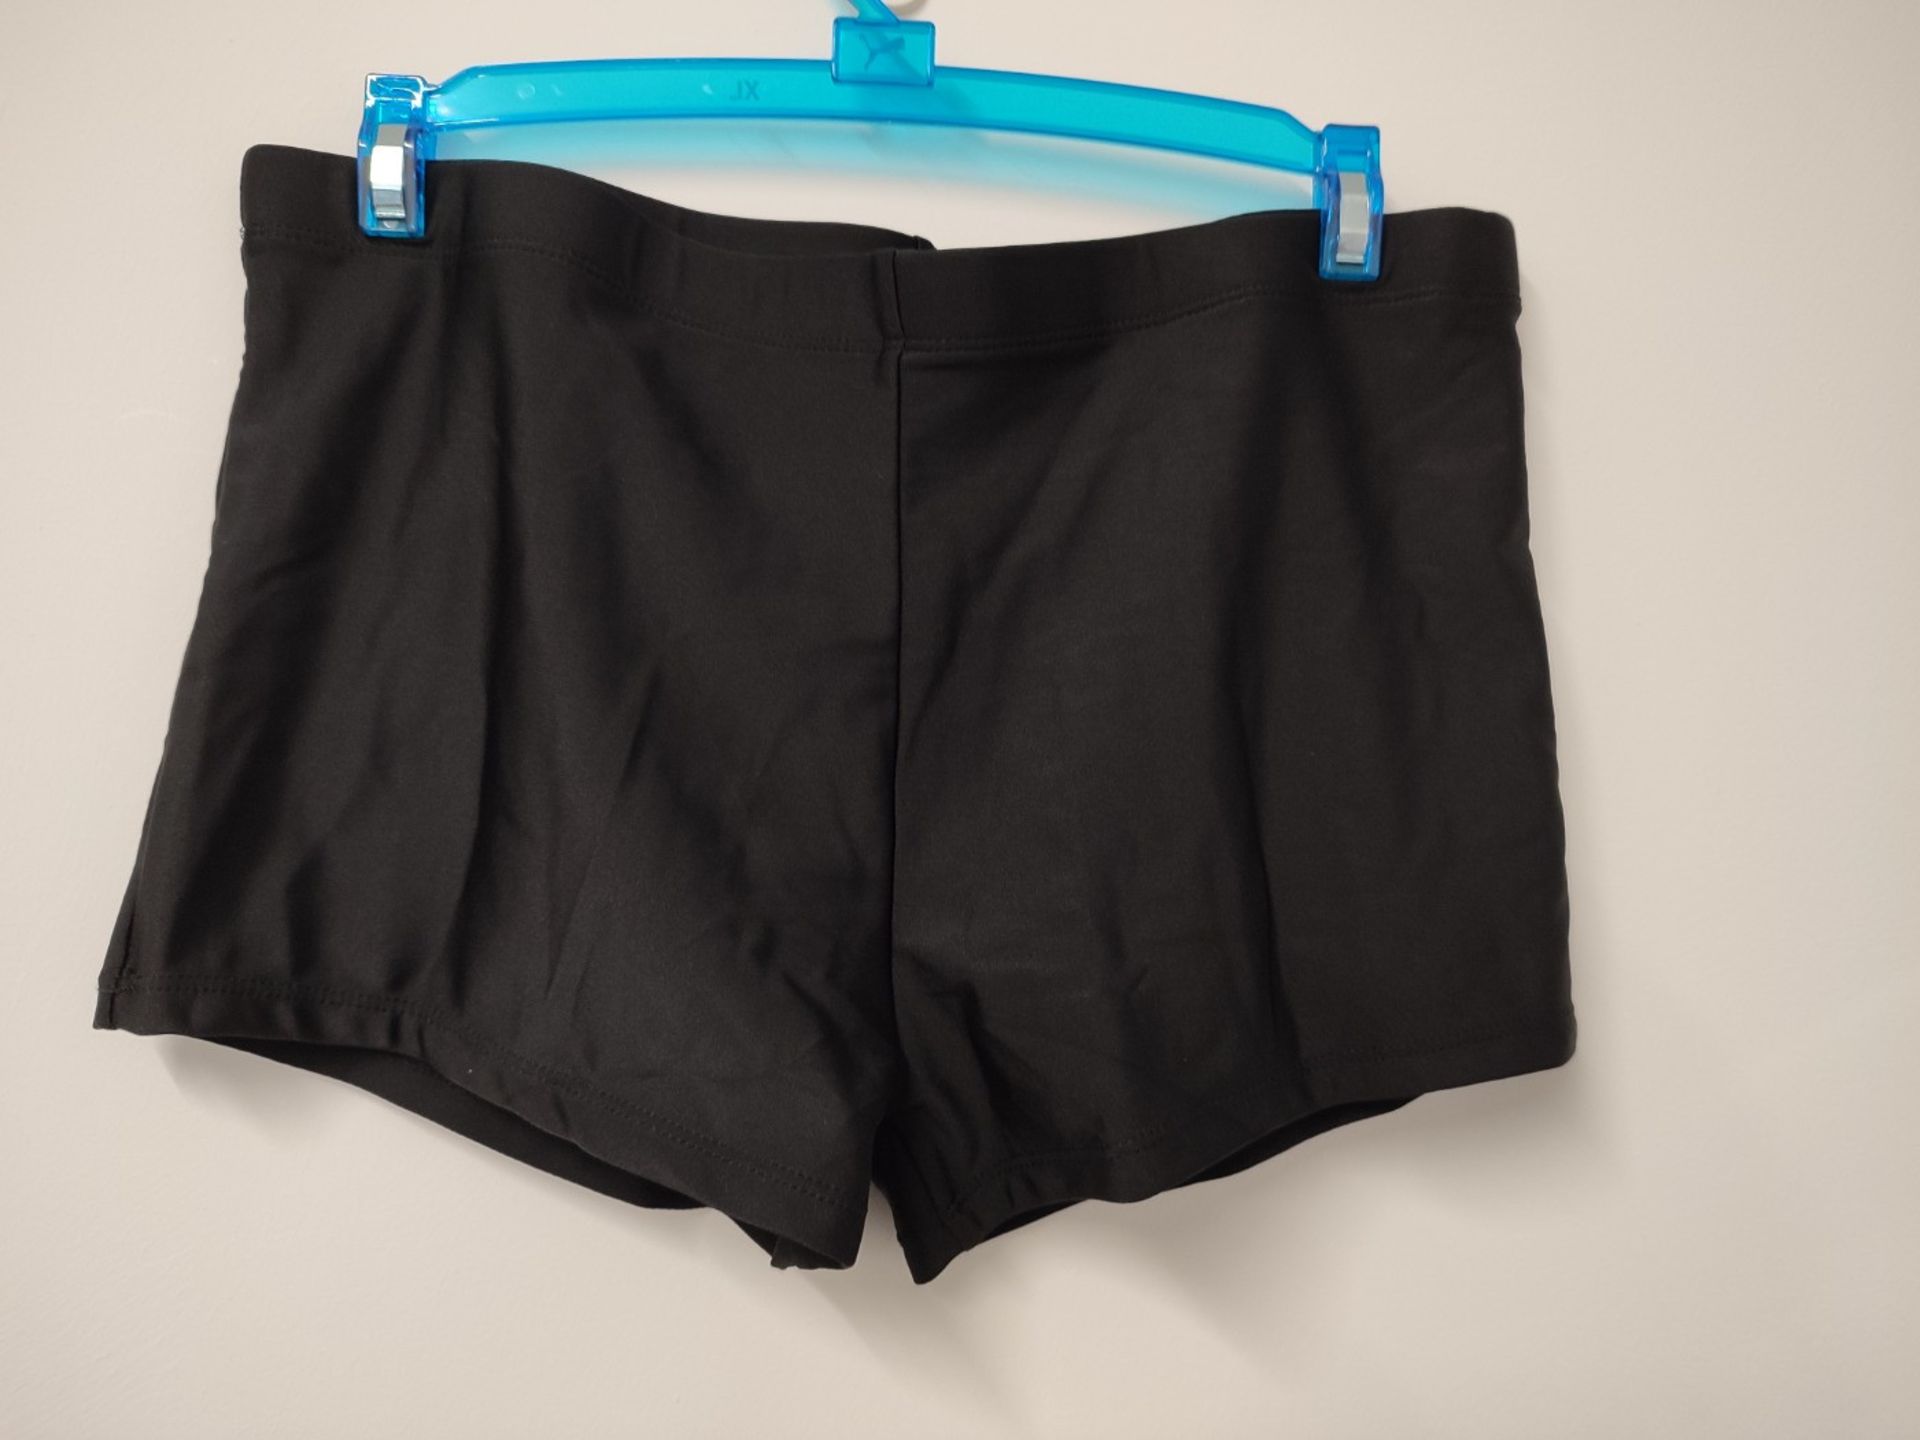 Octopus F5682 Oversized Swimwear Tankini Set with Hot Pants Size 34-66, Tankini black, - Image 3 of 3